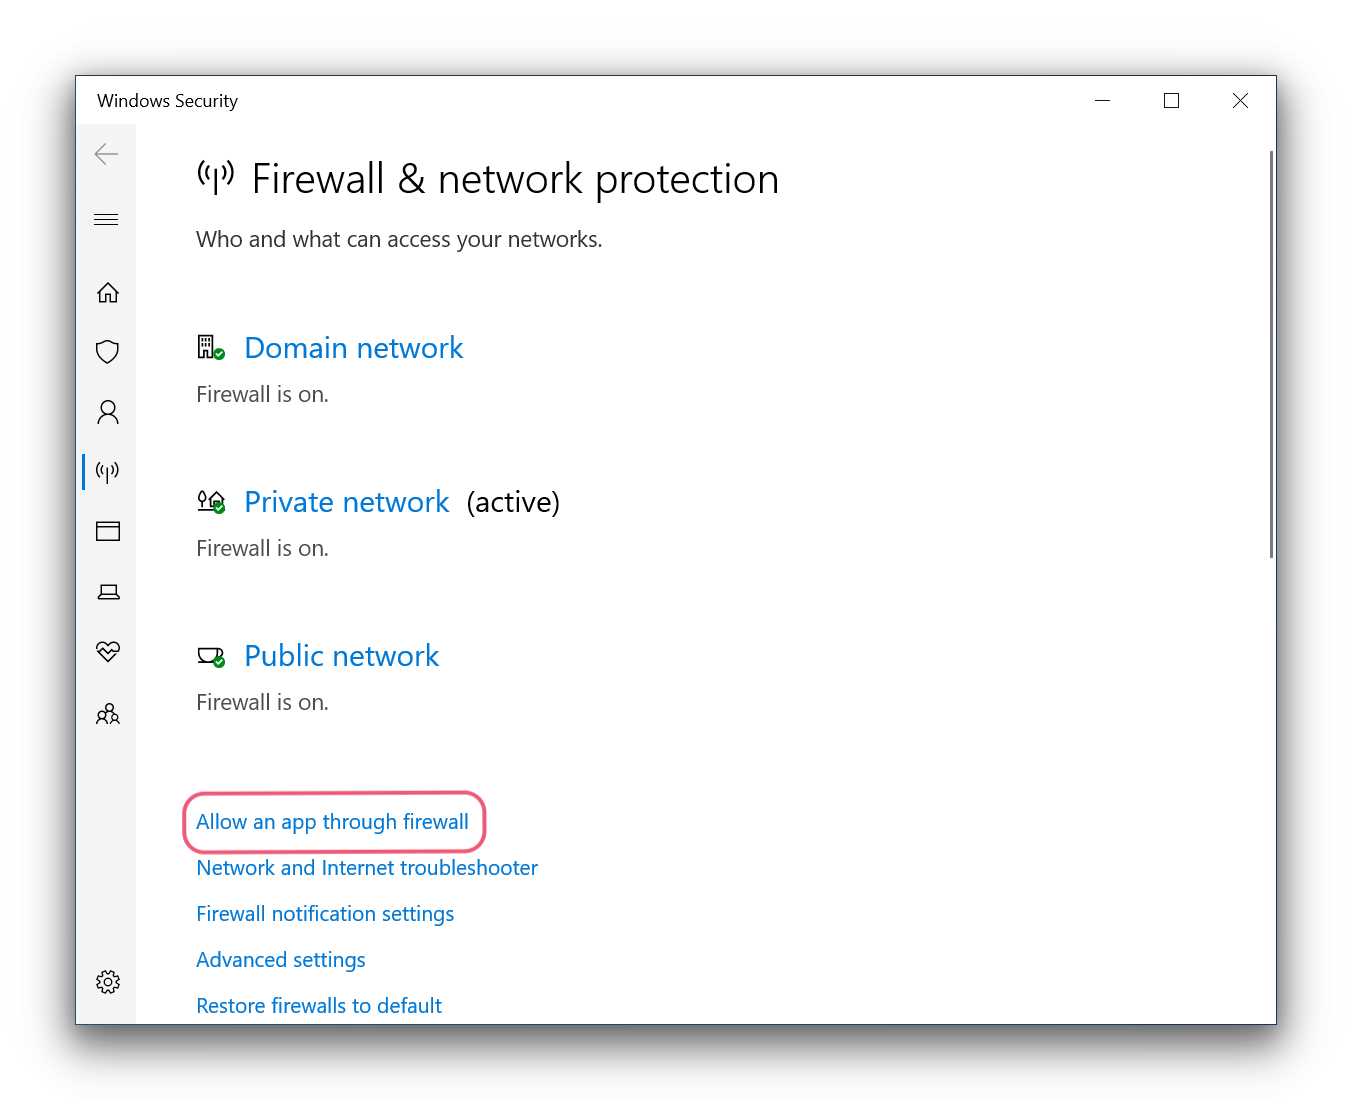 Windows Security Firewall Settings